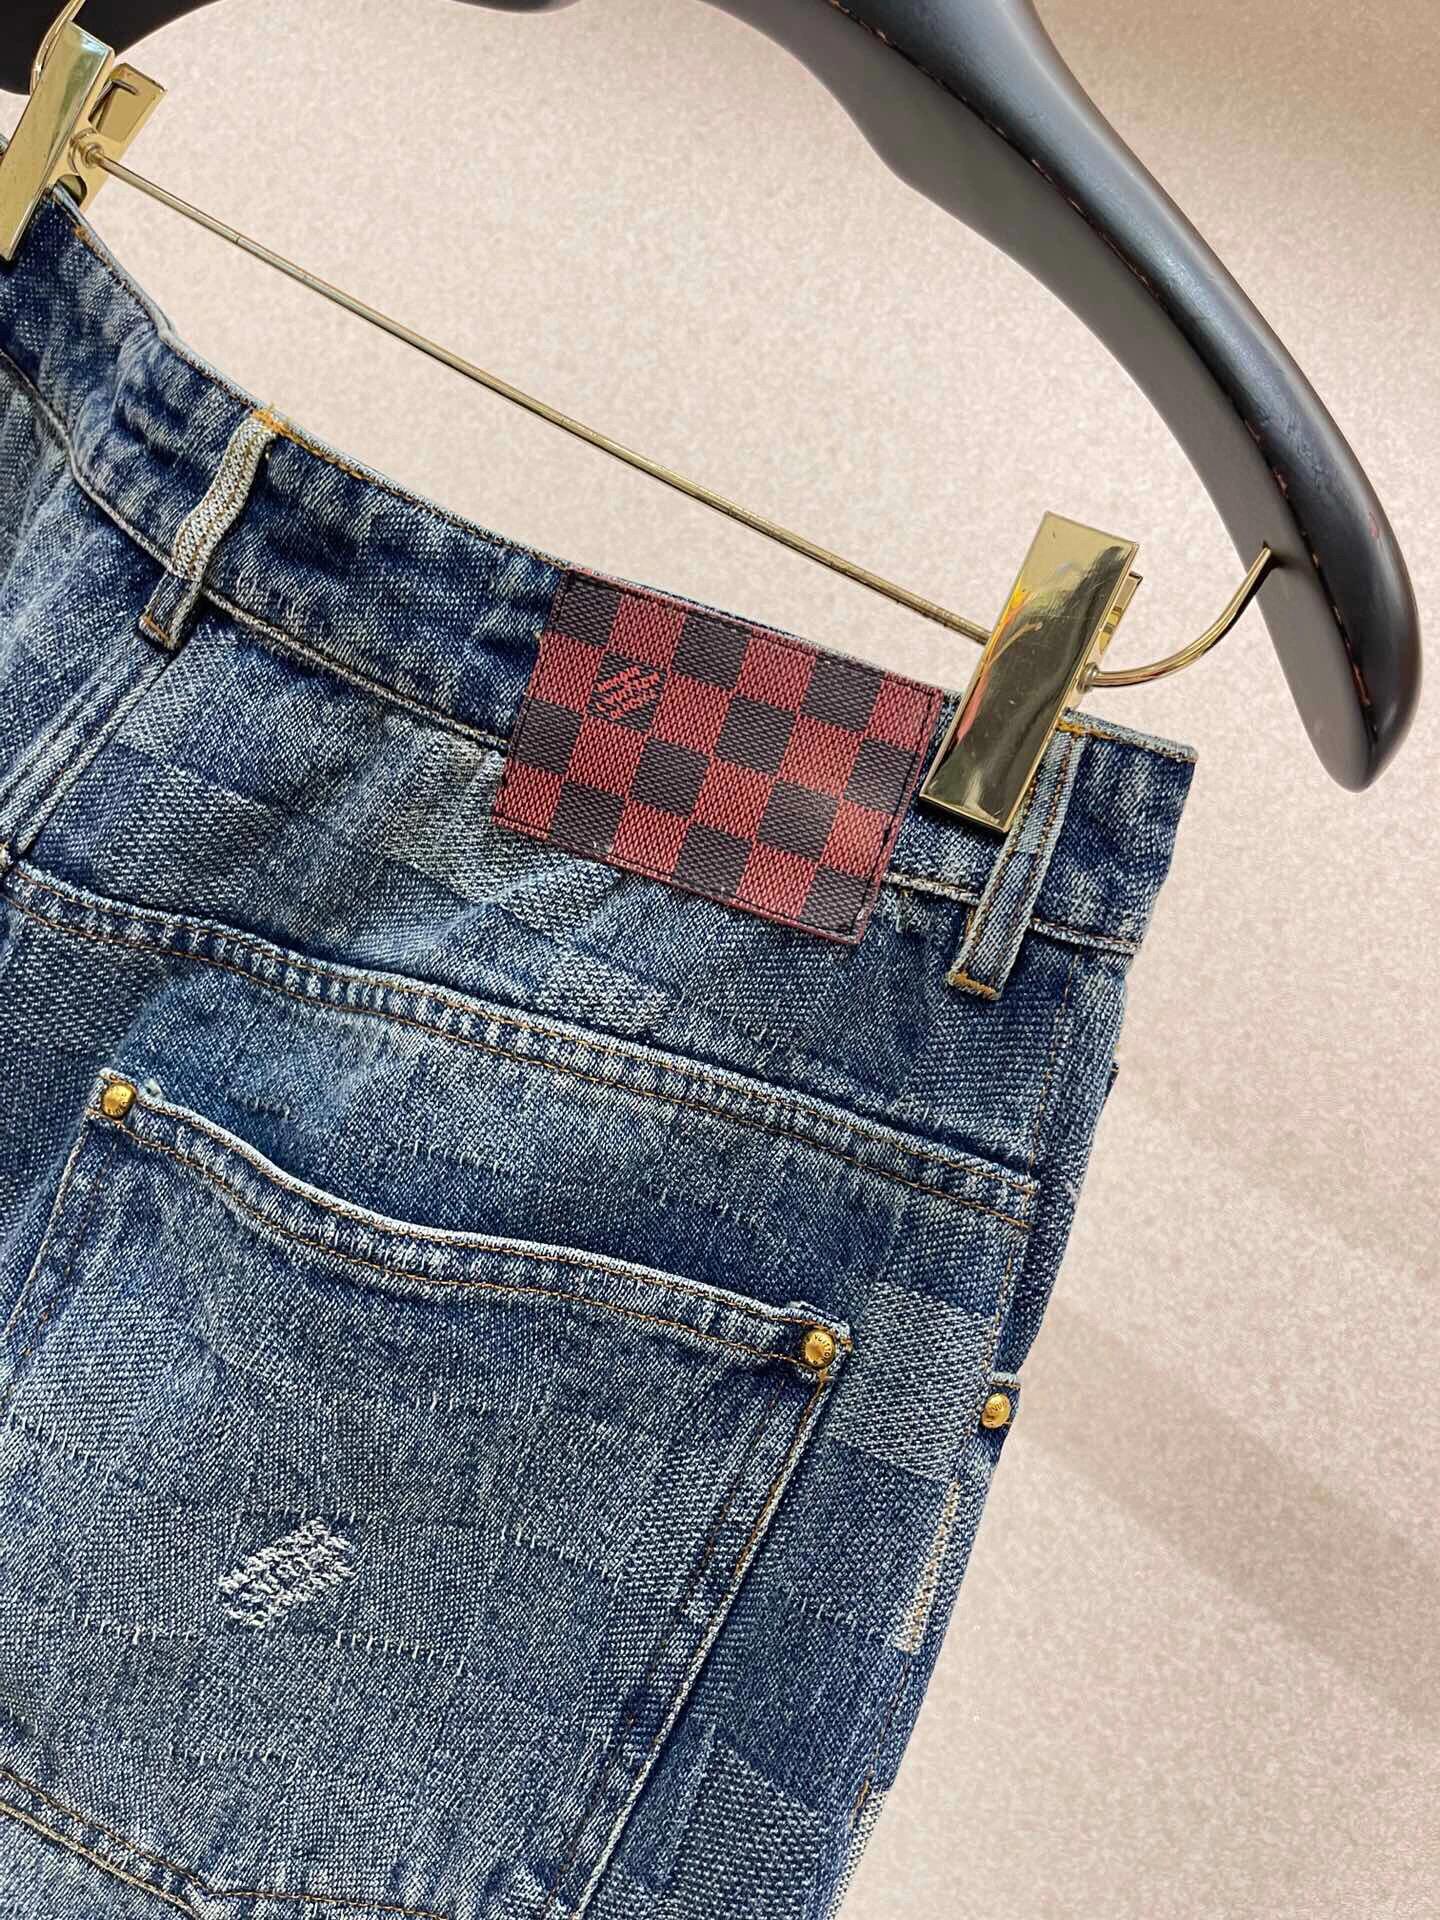 New mosaic pattern jeans